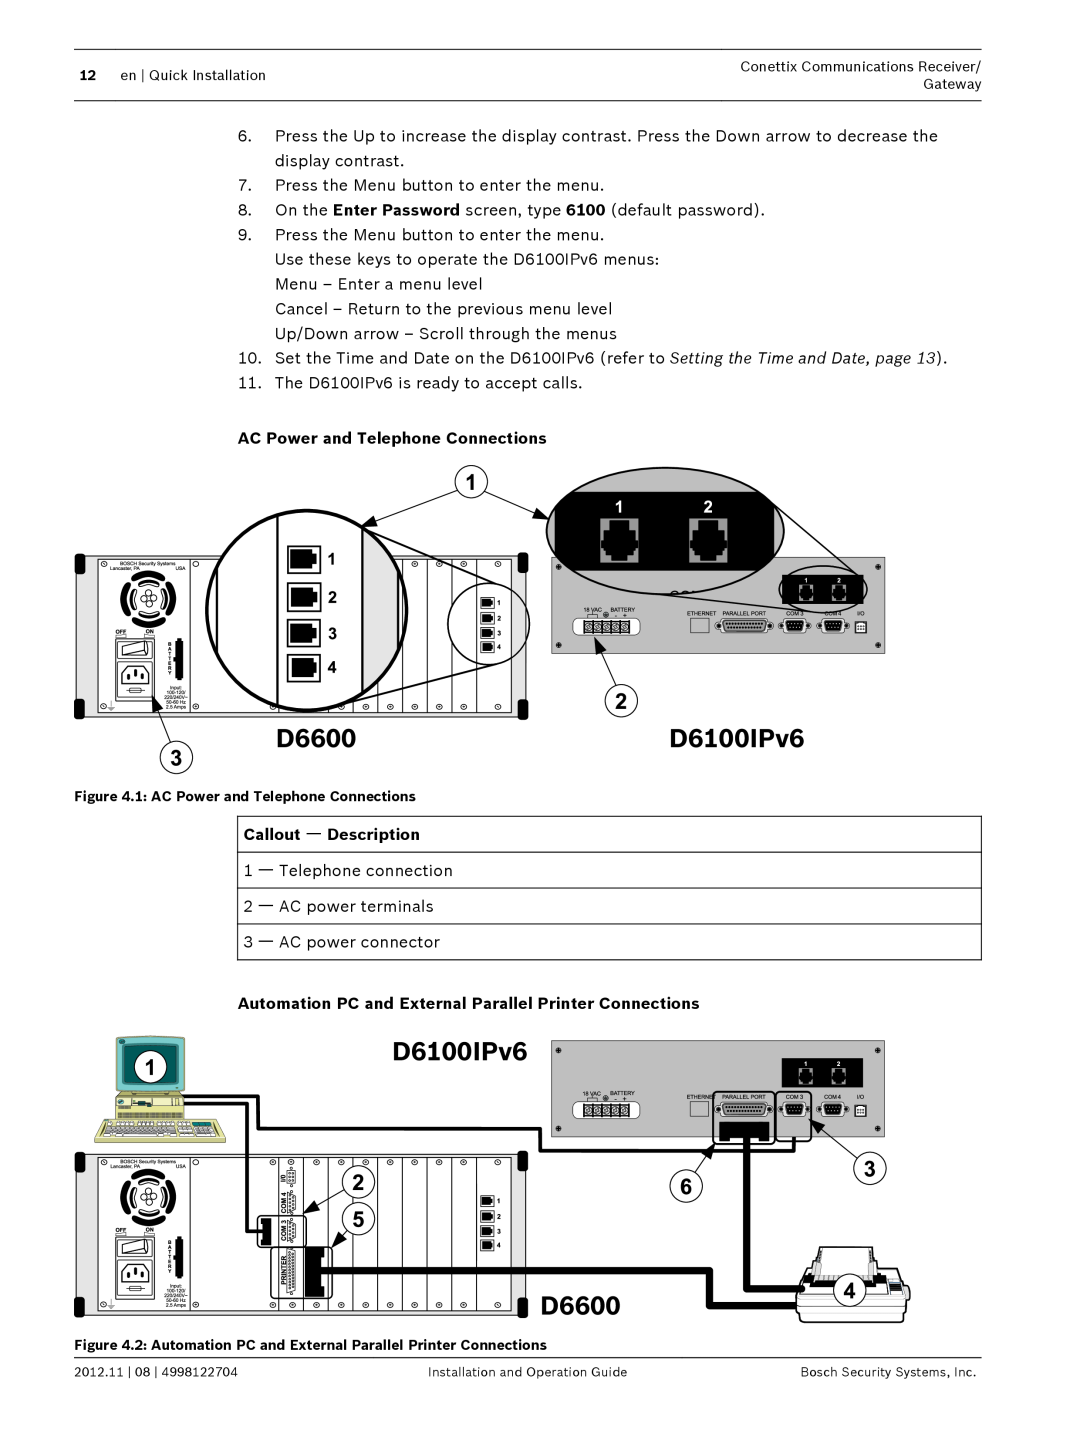 Bosch Appliances D6100IPV6 D6600, AC Power and Telephone Connections, Callout ᅳ Description 